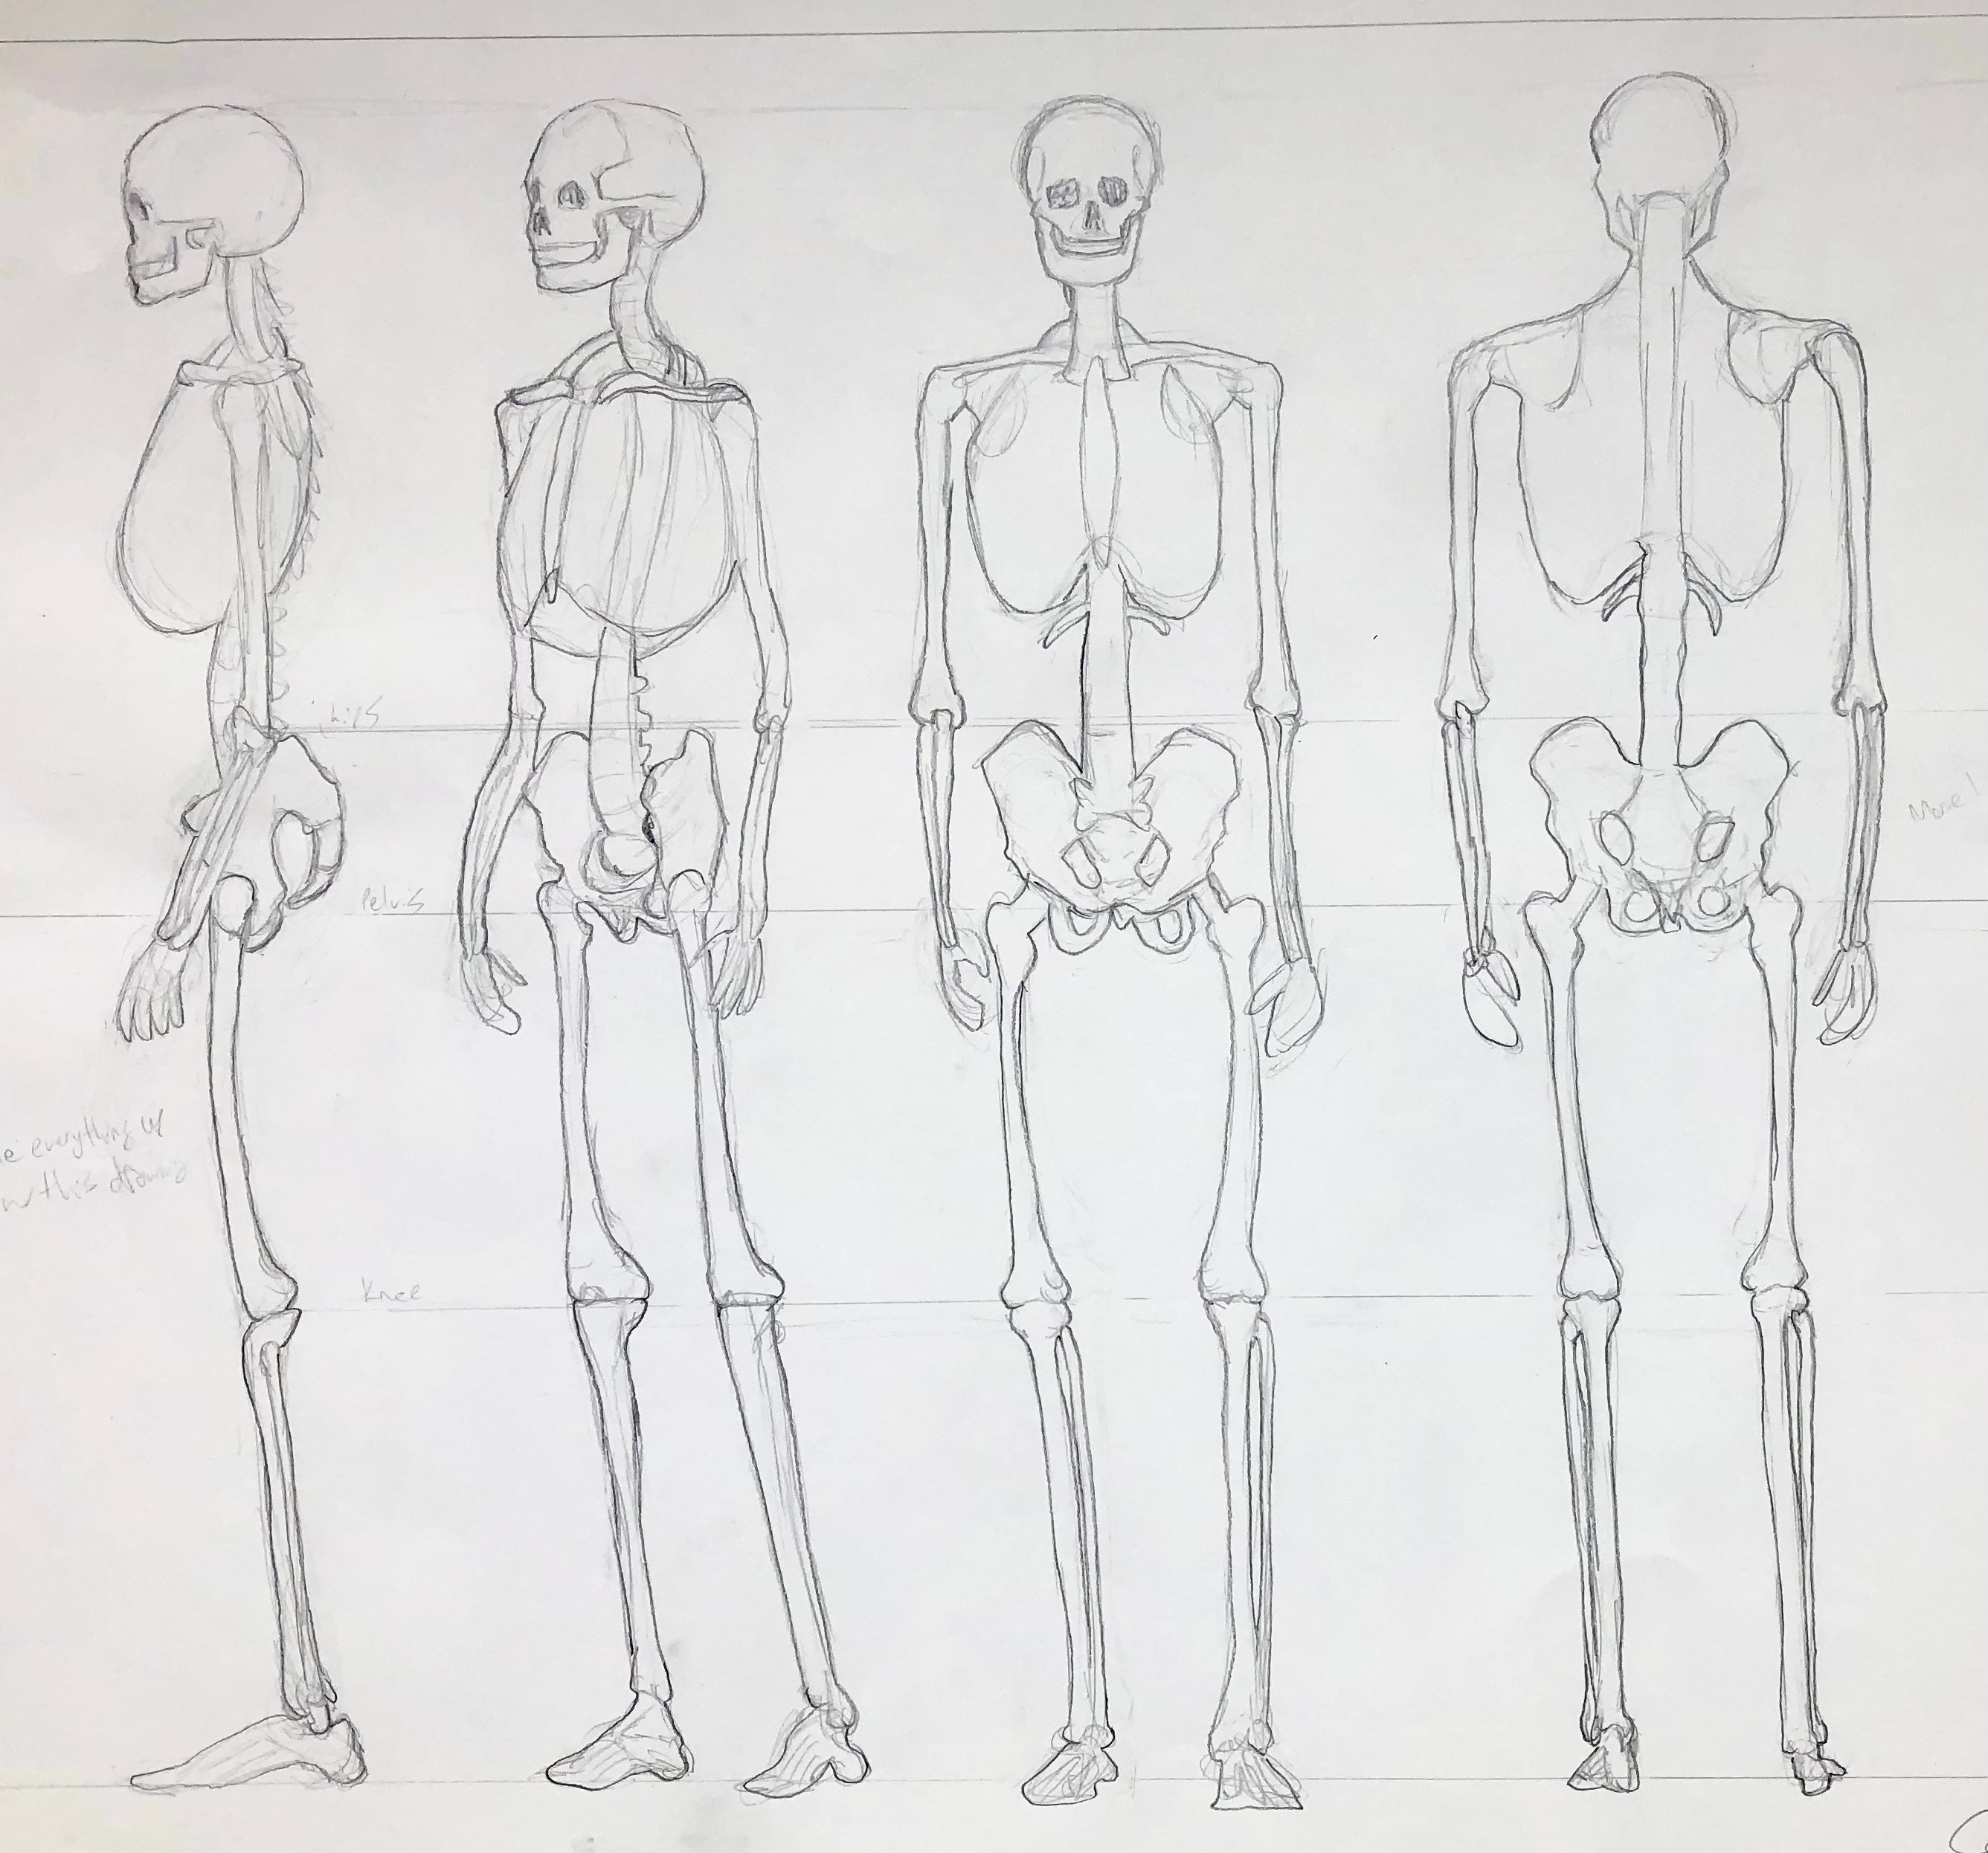 Skeleton practice. Graphite on white paper.